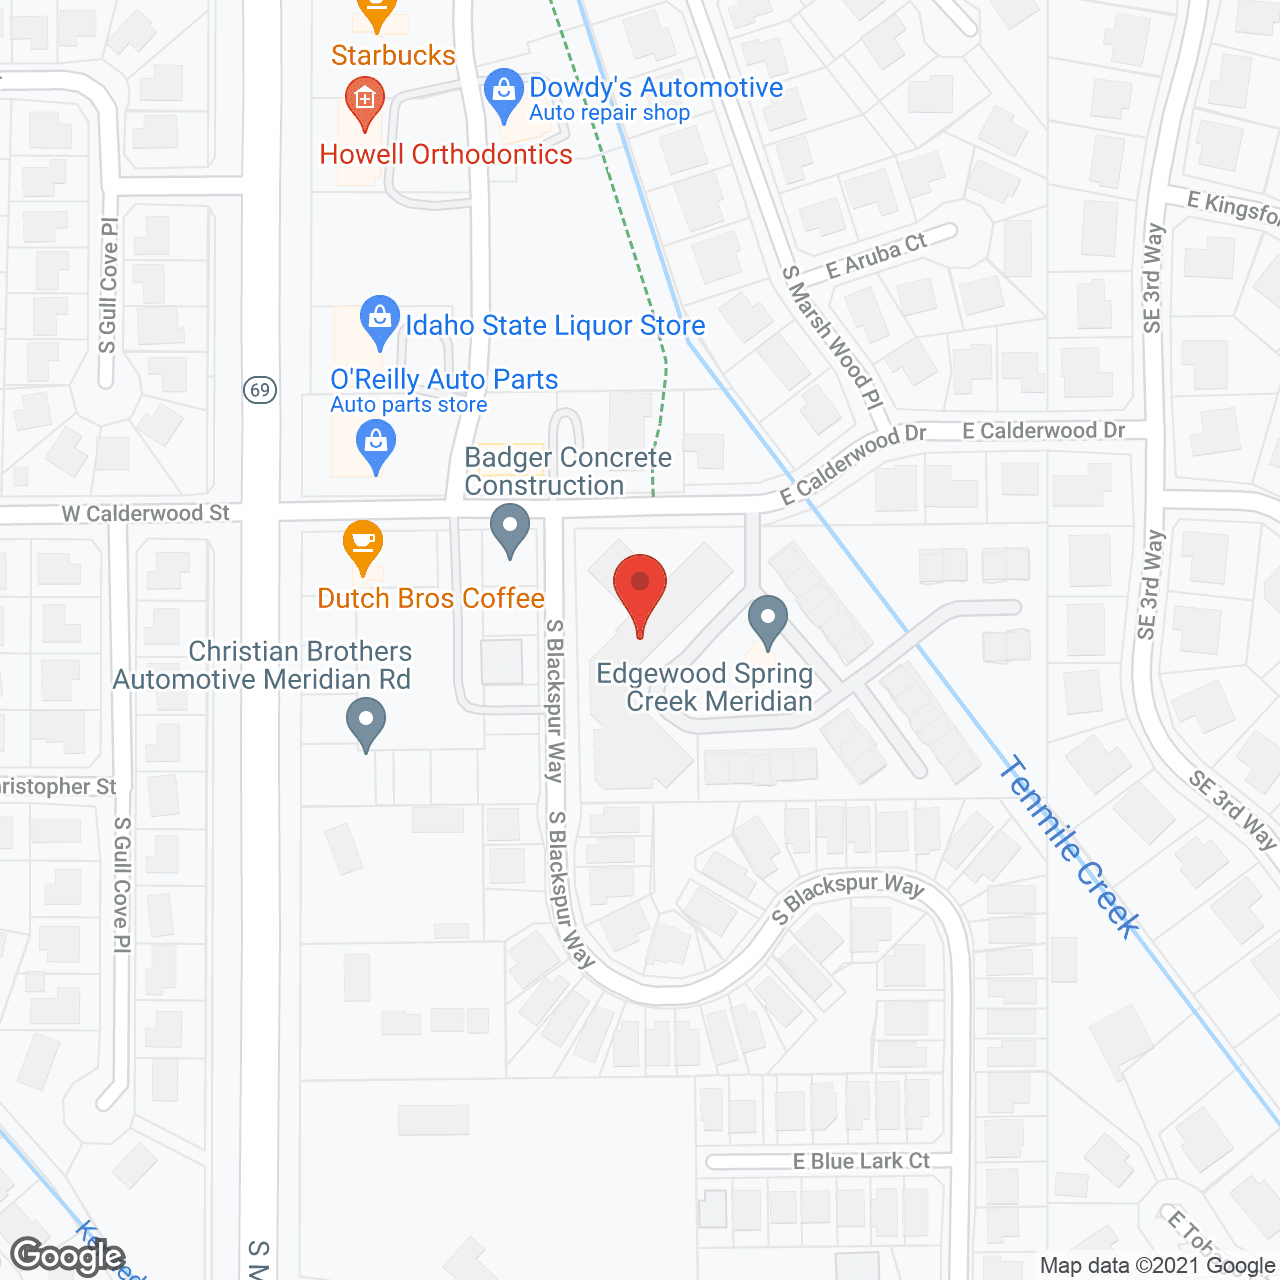 Edgewood Spring Creek Meridian, LLC in google map